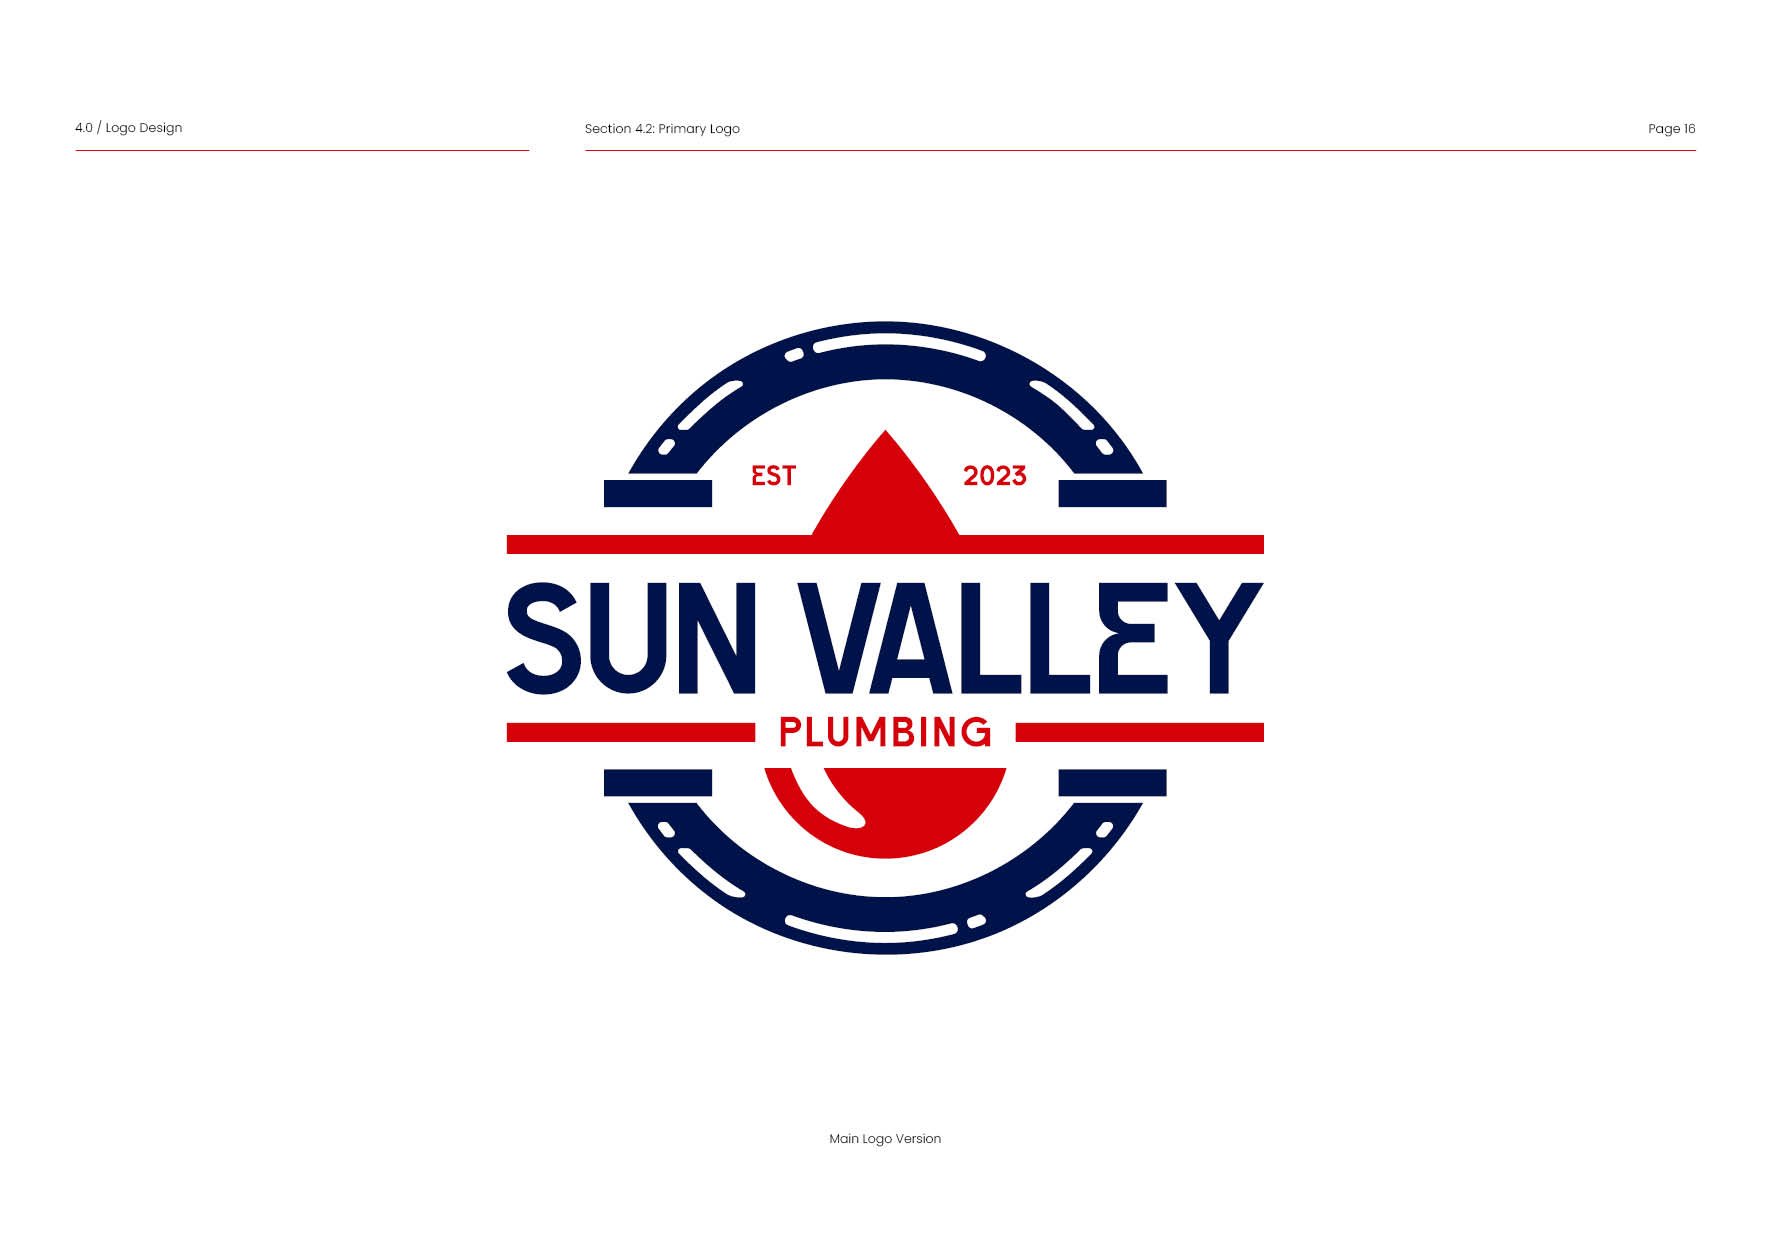 Sun Valley Plumbing - Brand Identity16.jpg